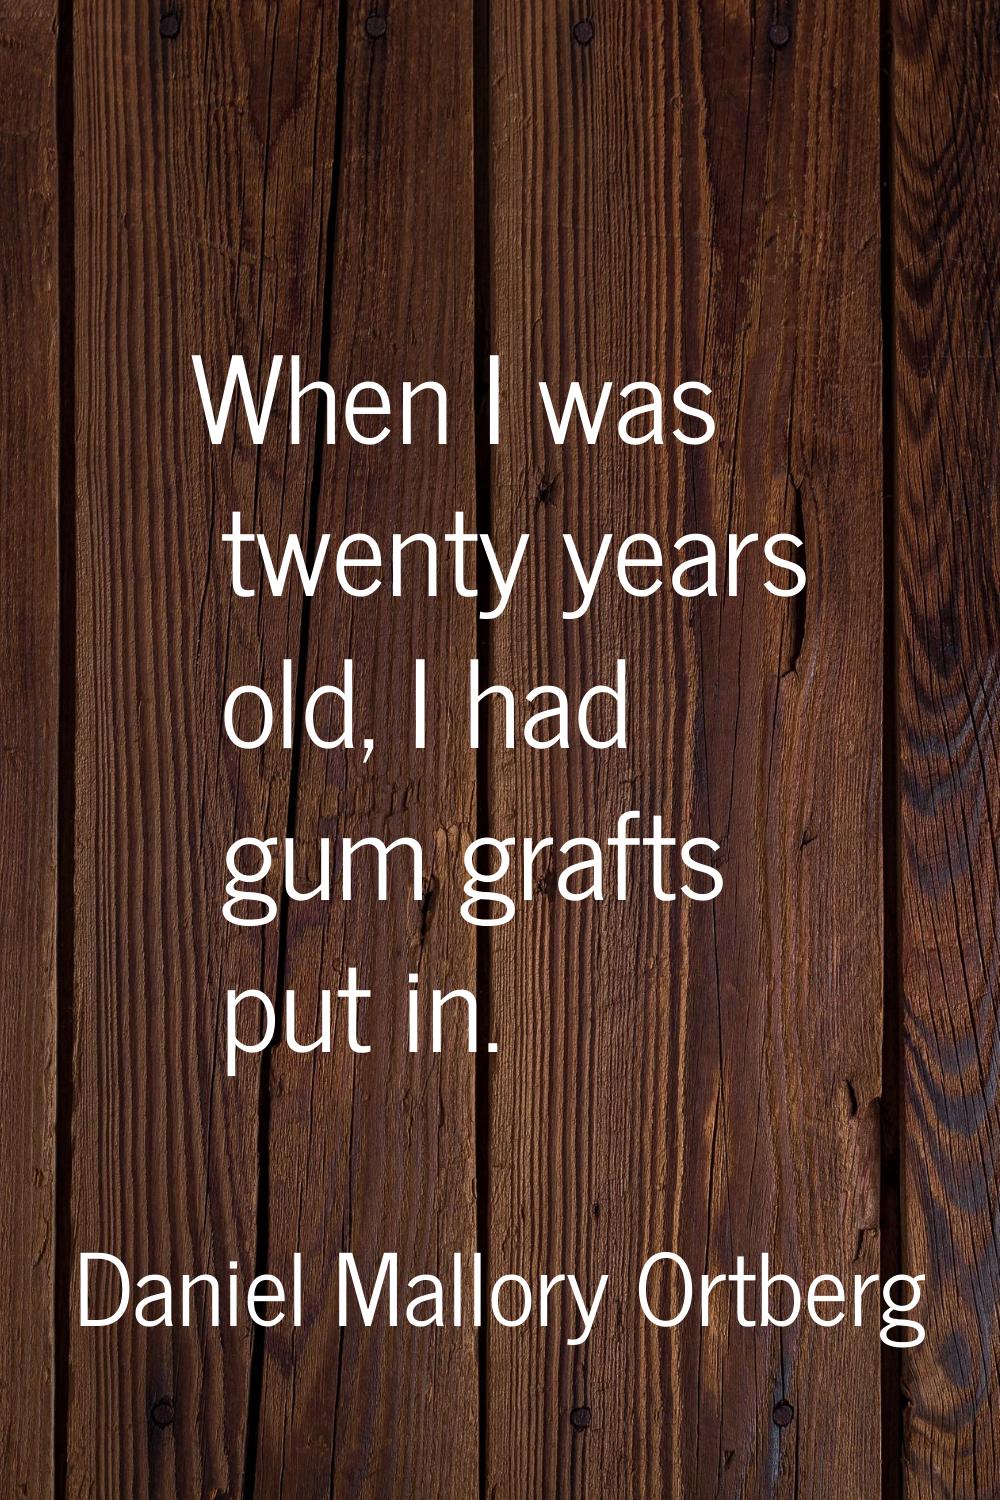 When I was twenty years old, I had gum grafts put in.